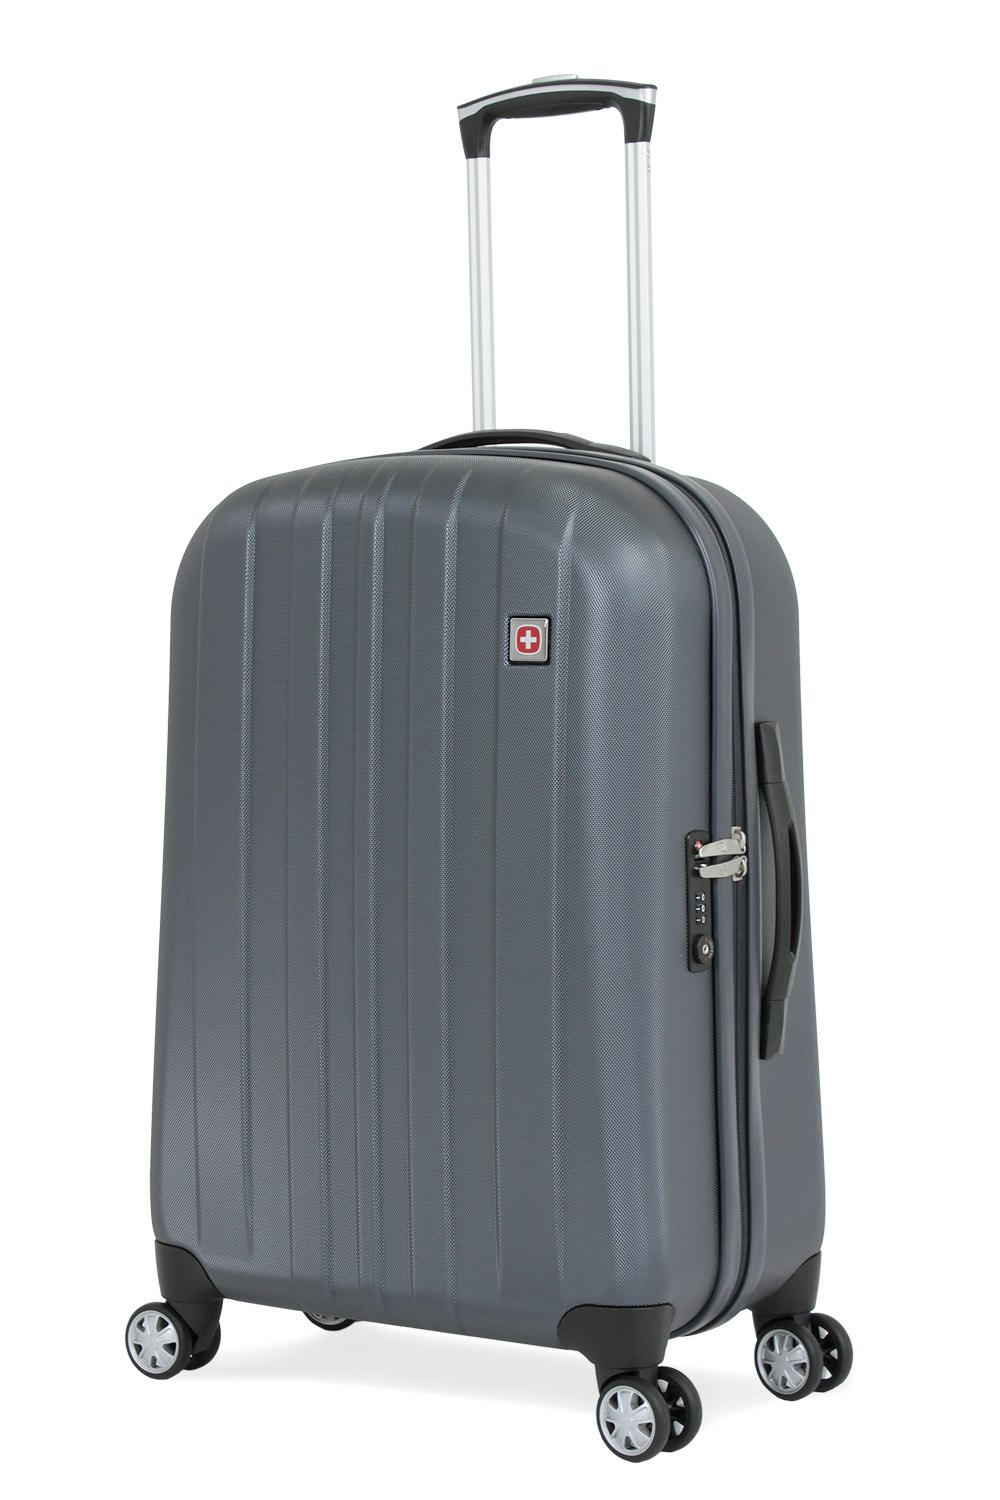 SwissGear 6151 Upright Hardside Luggage Collection 